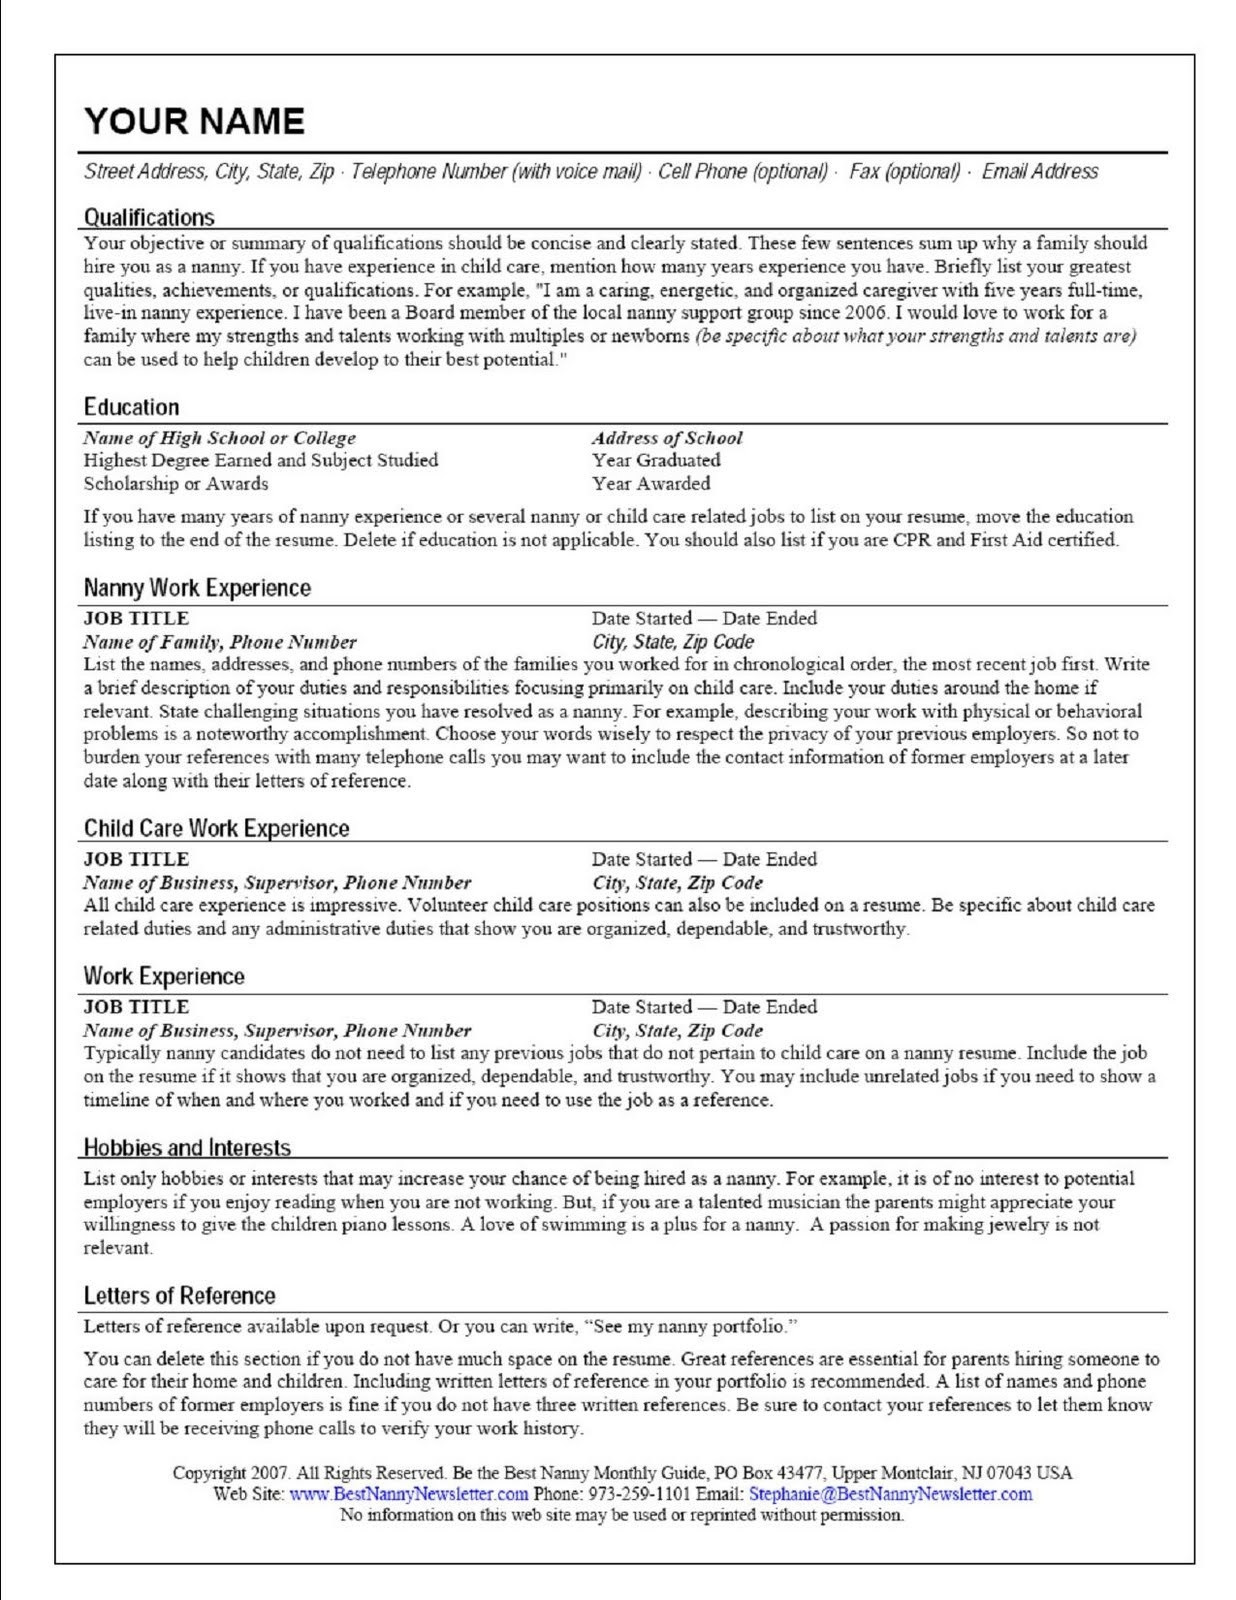 Sample Resume for Caregiver Position Elderly Sample Resume for Caregiver for An Elderly